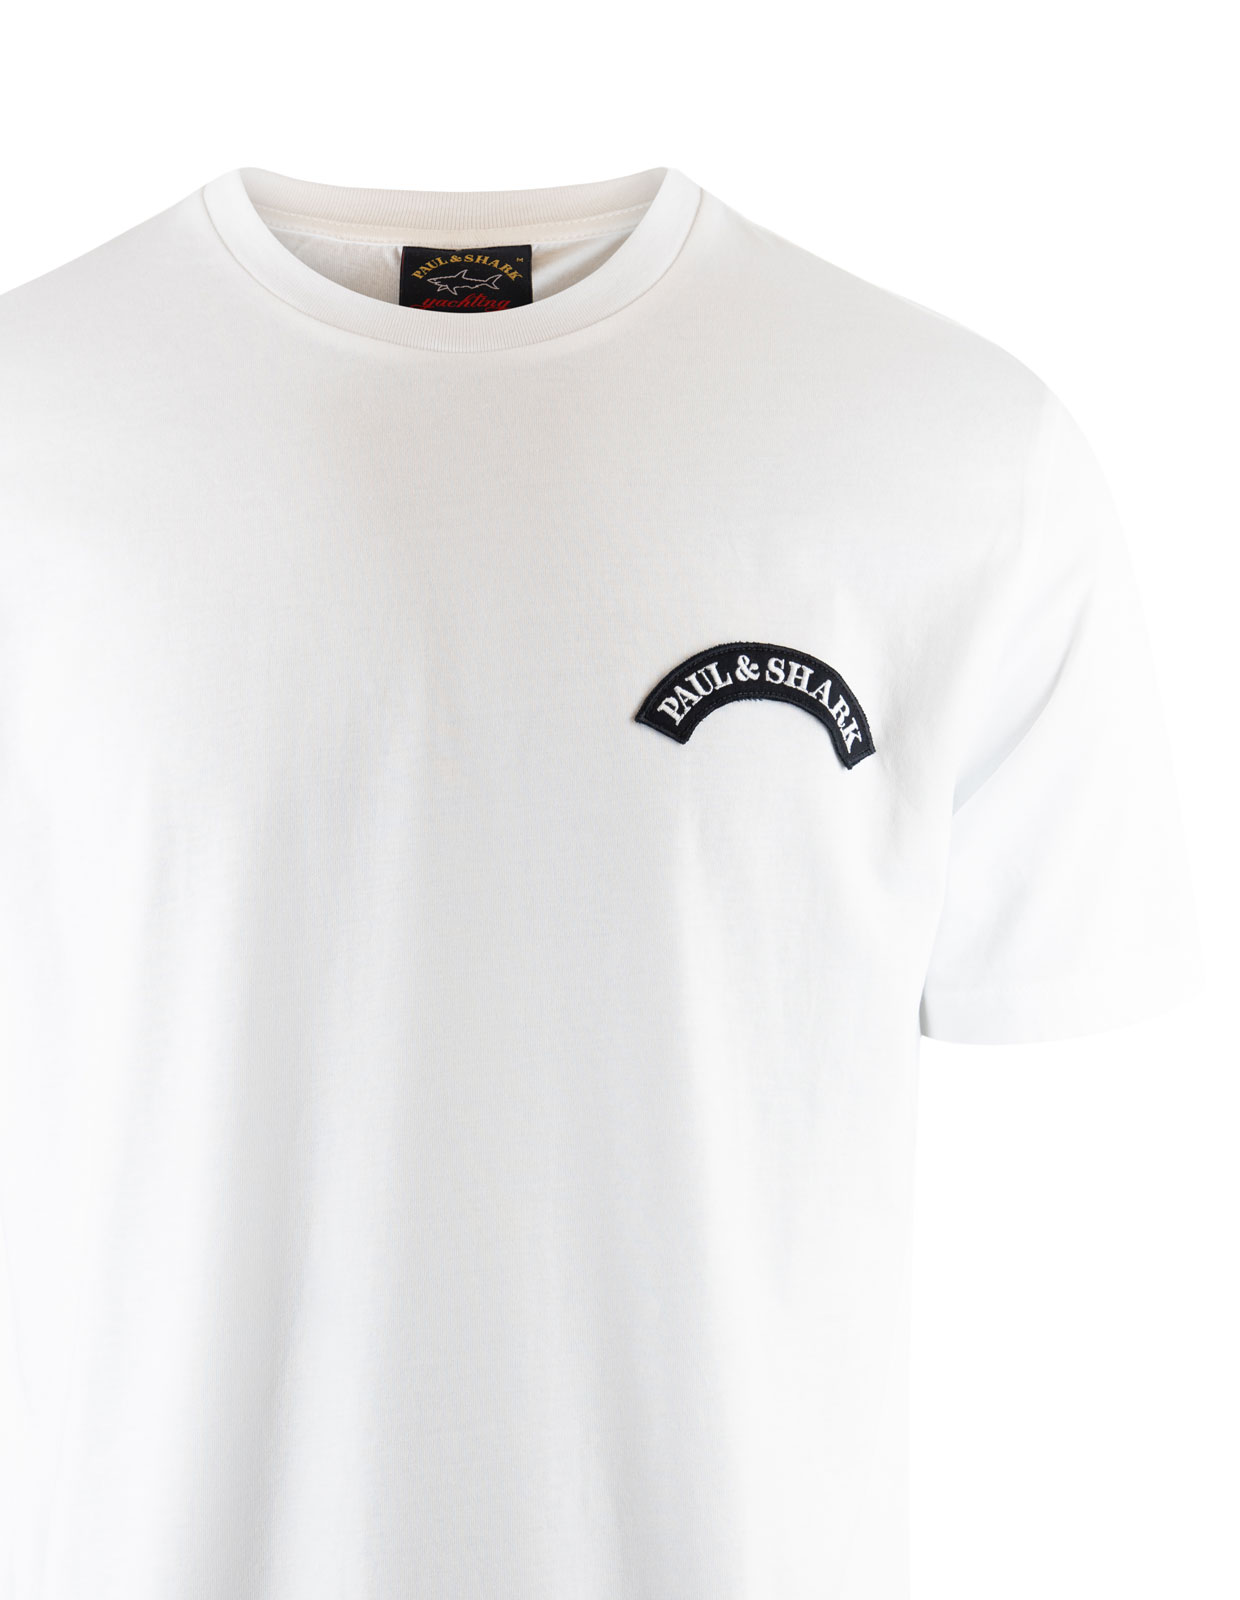 Shark Print T-Shirt White